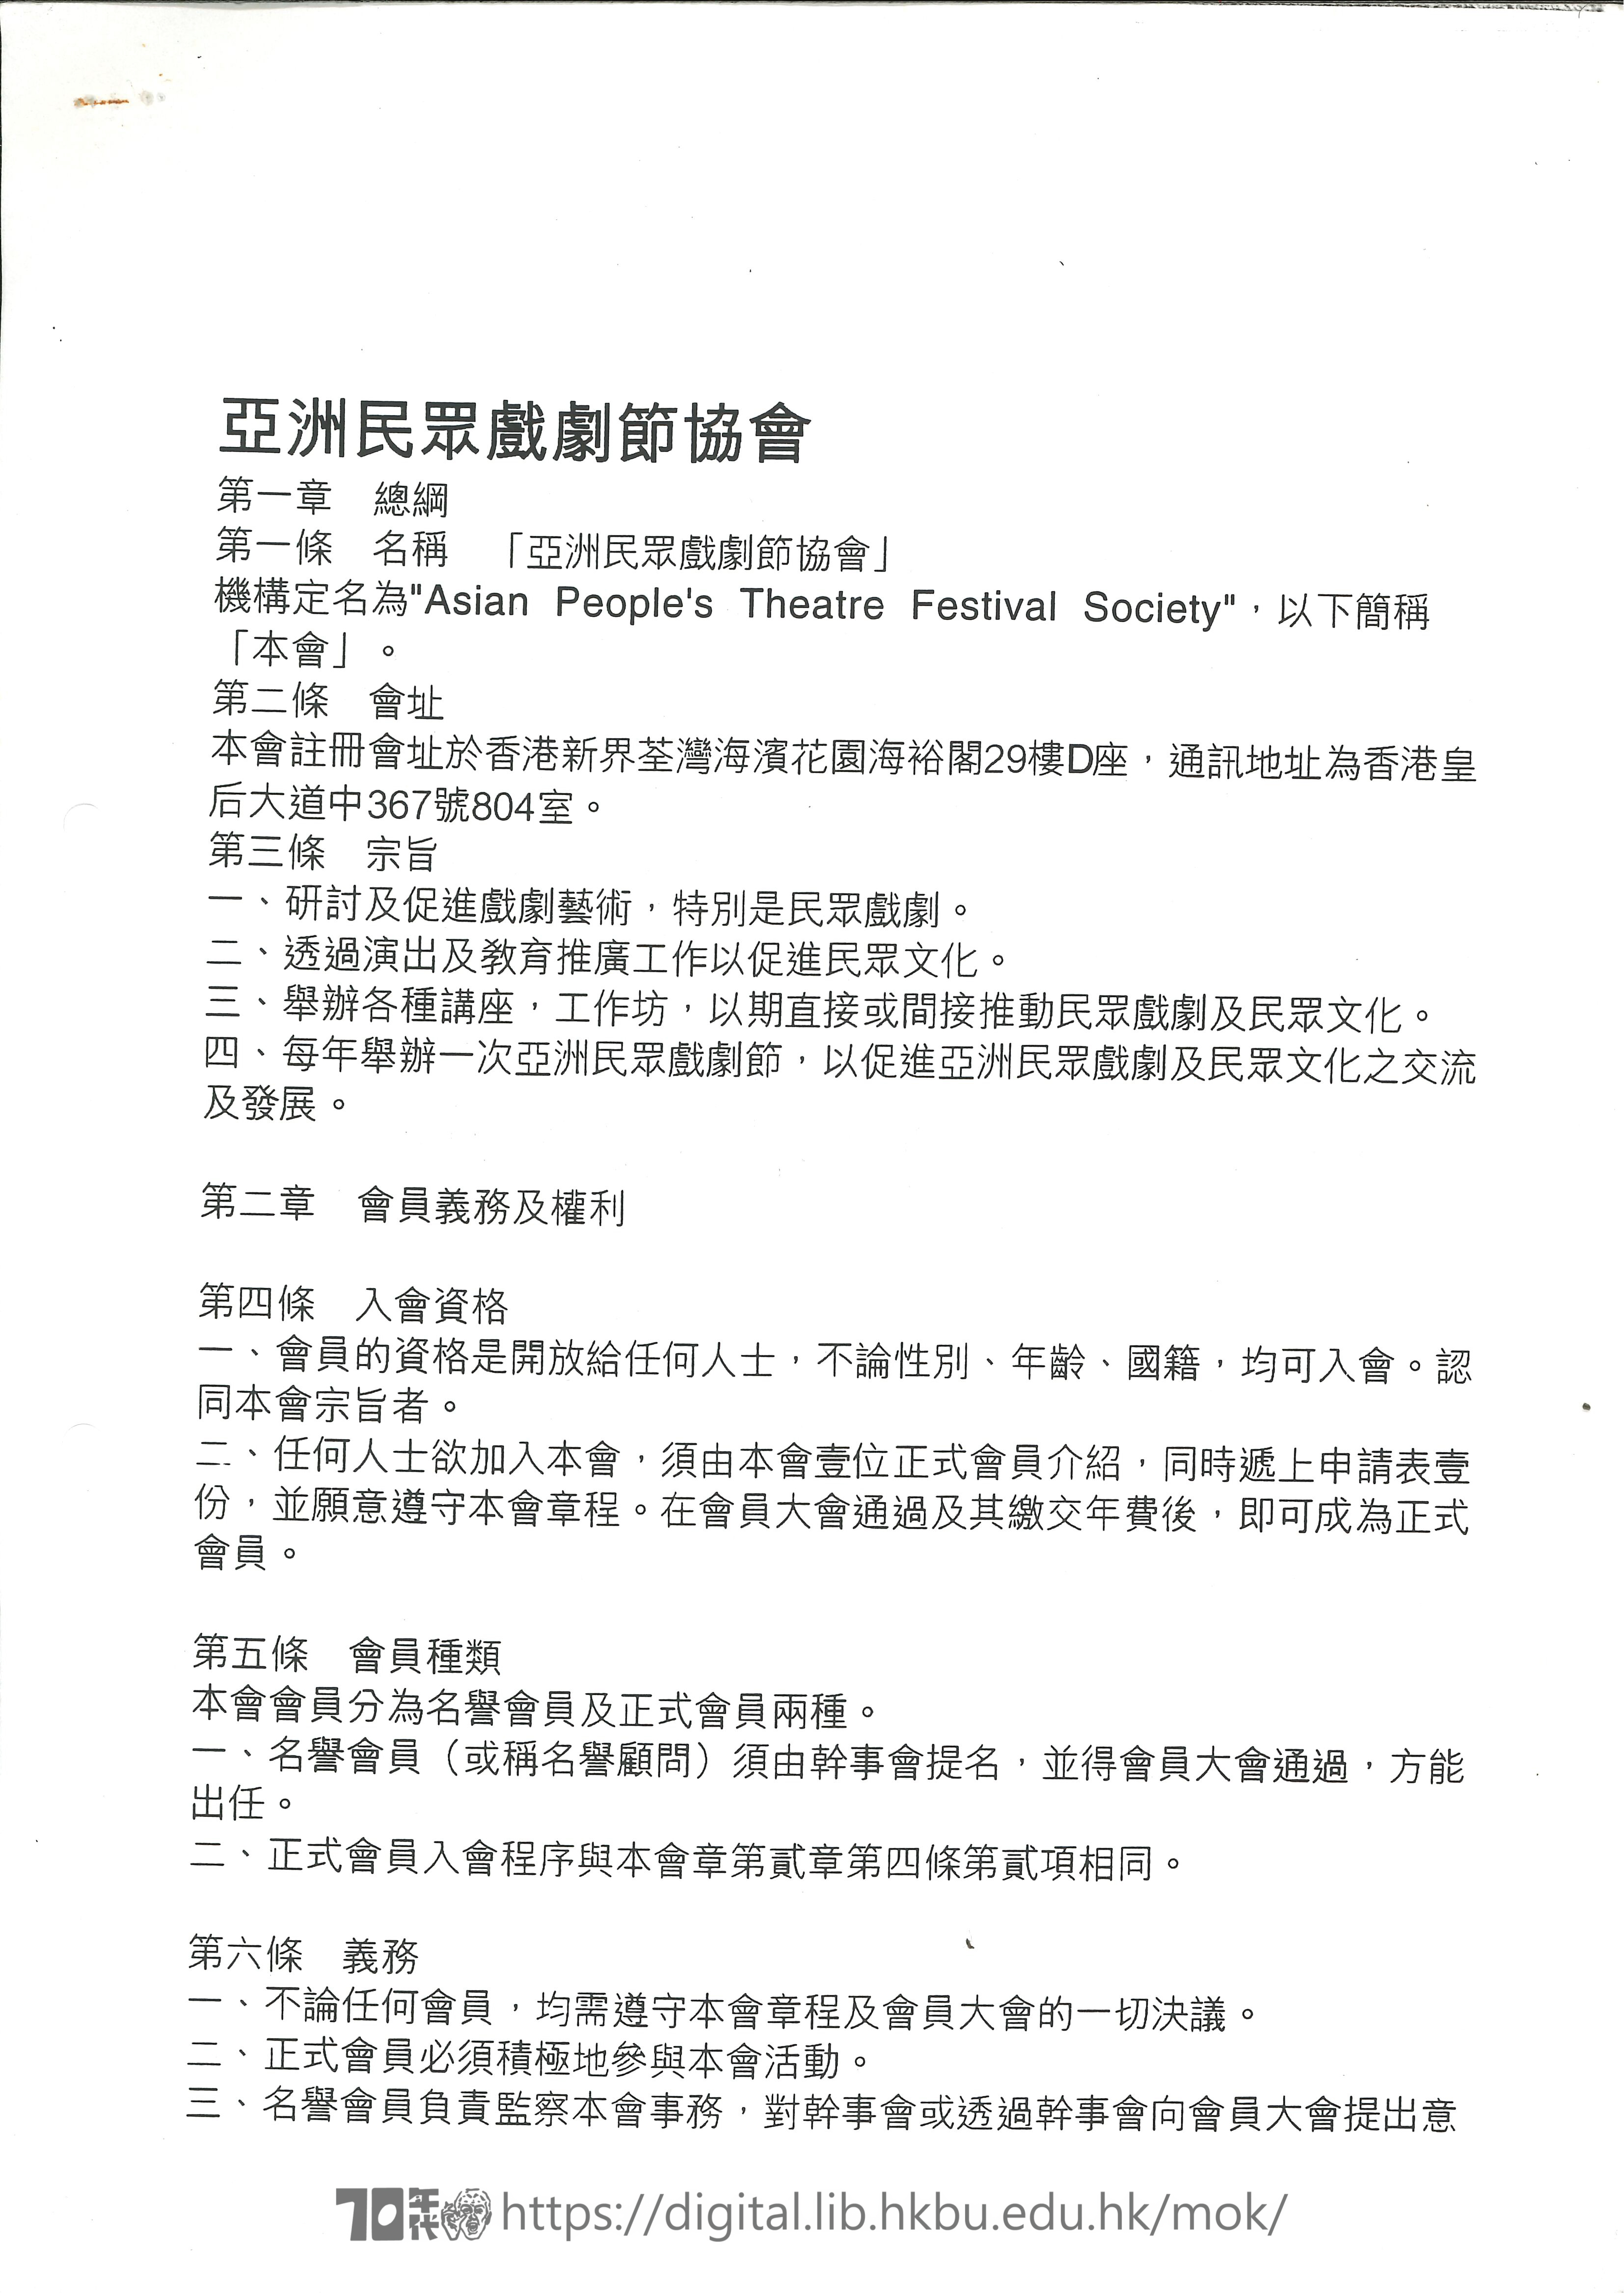   Asian Theatre Festival Society charter  